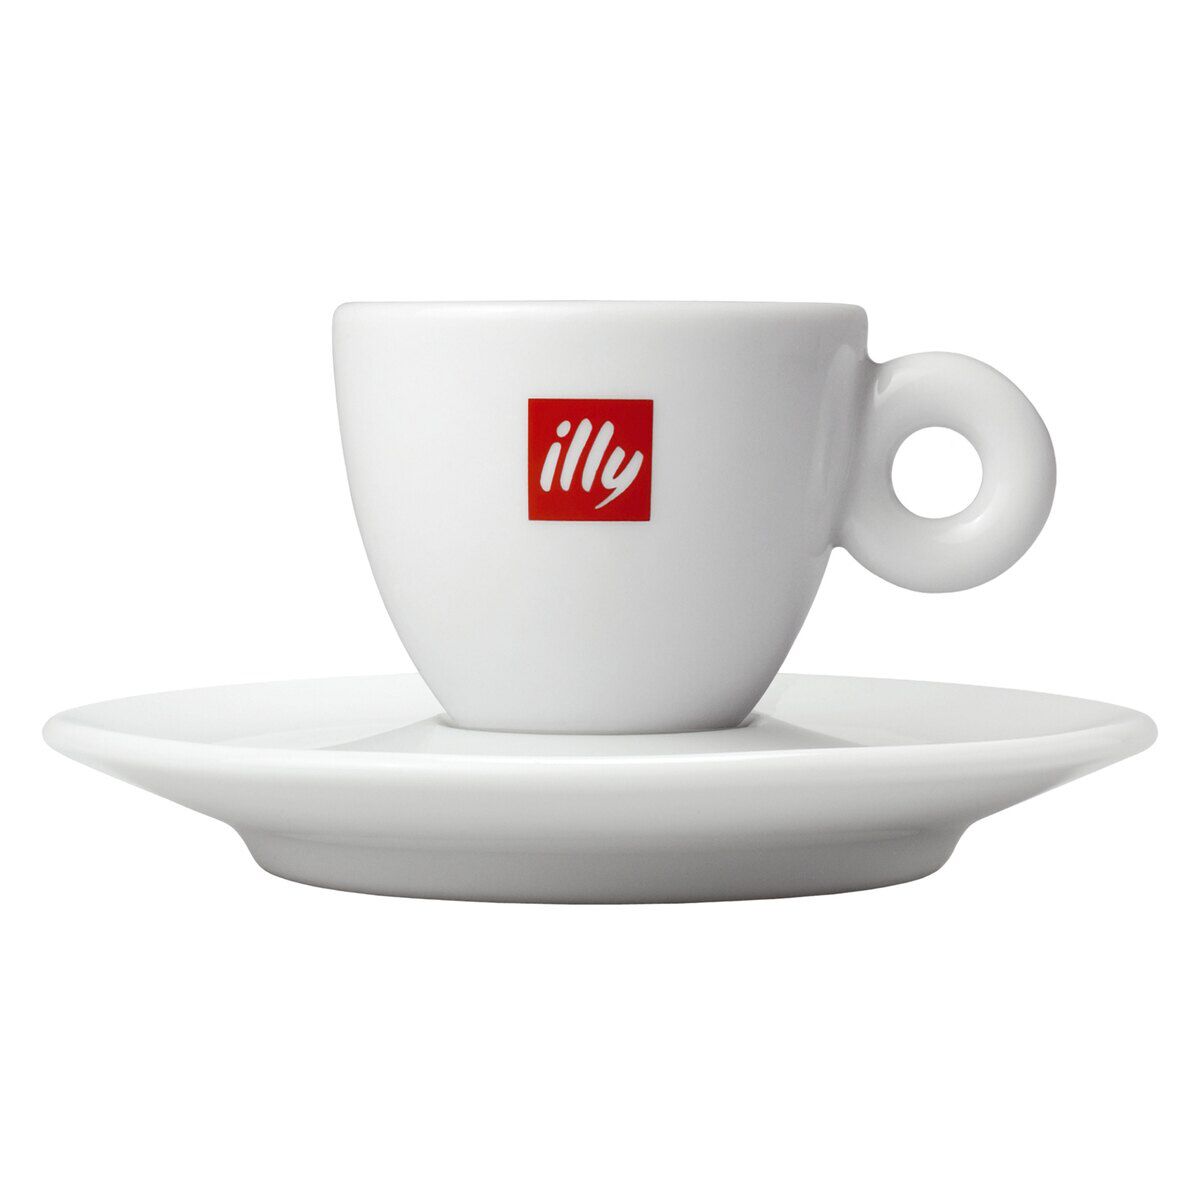 Tasse à espresso avec logo illy – Une tasse à espresso de 3 oz